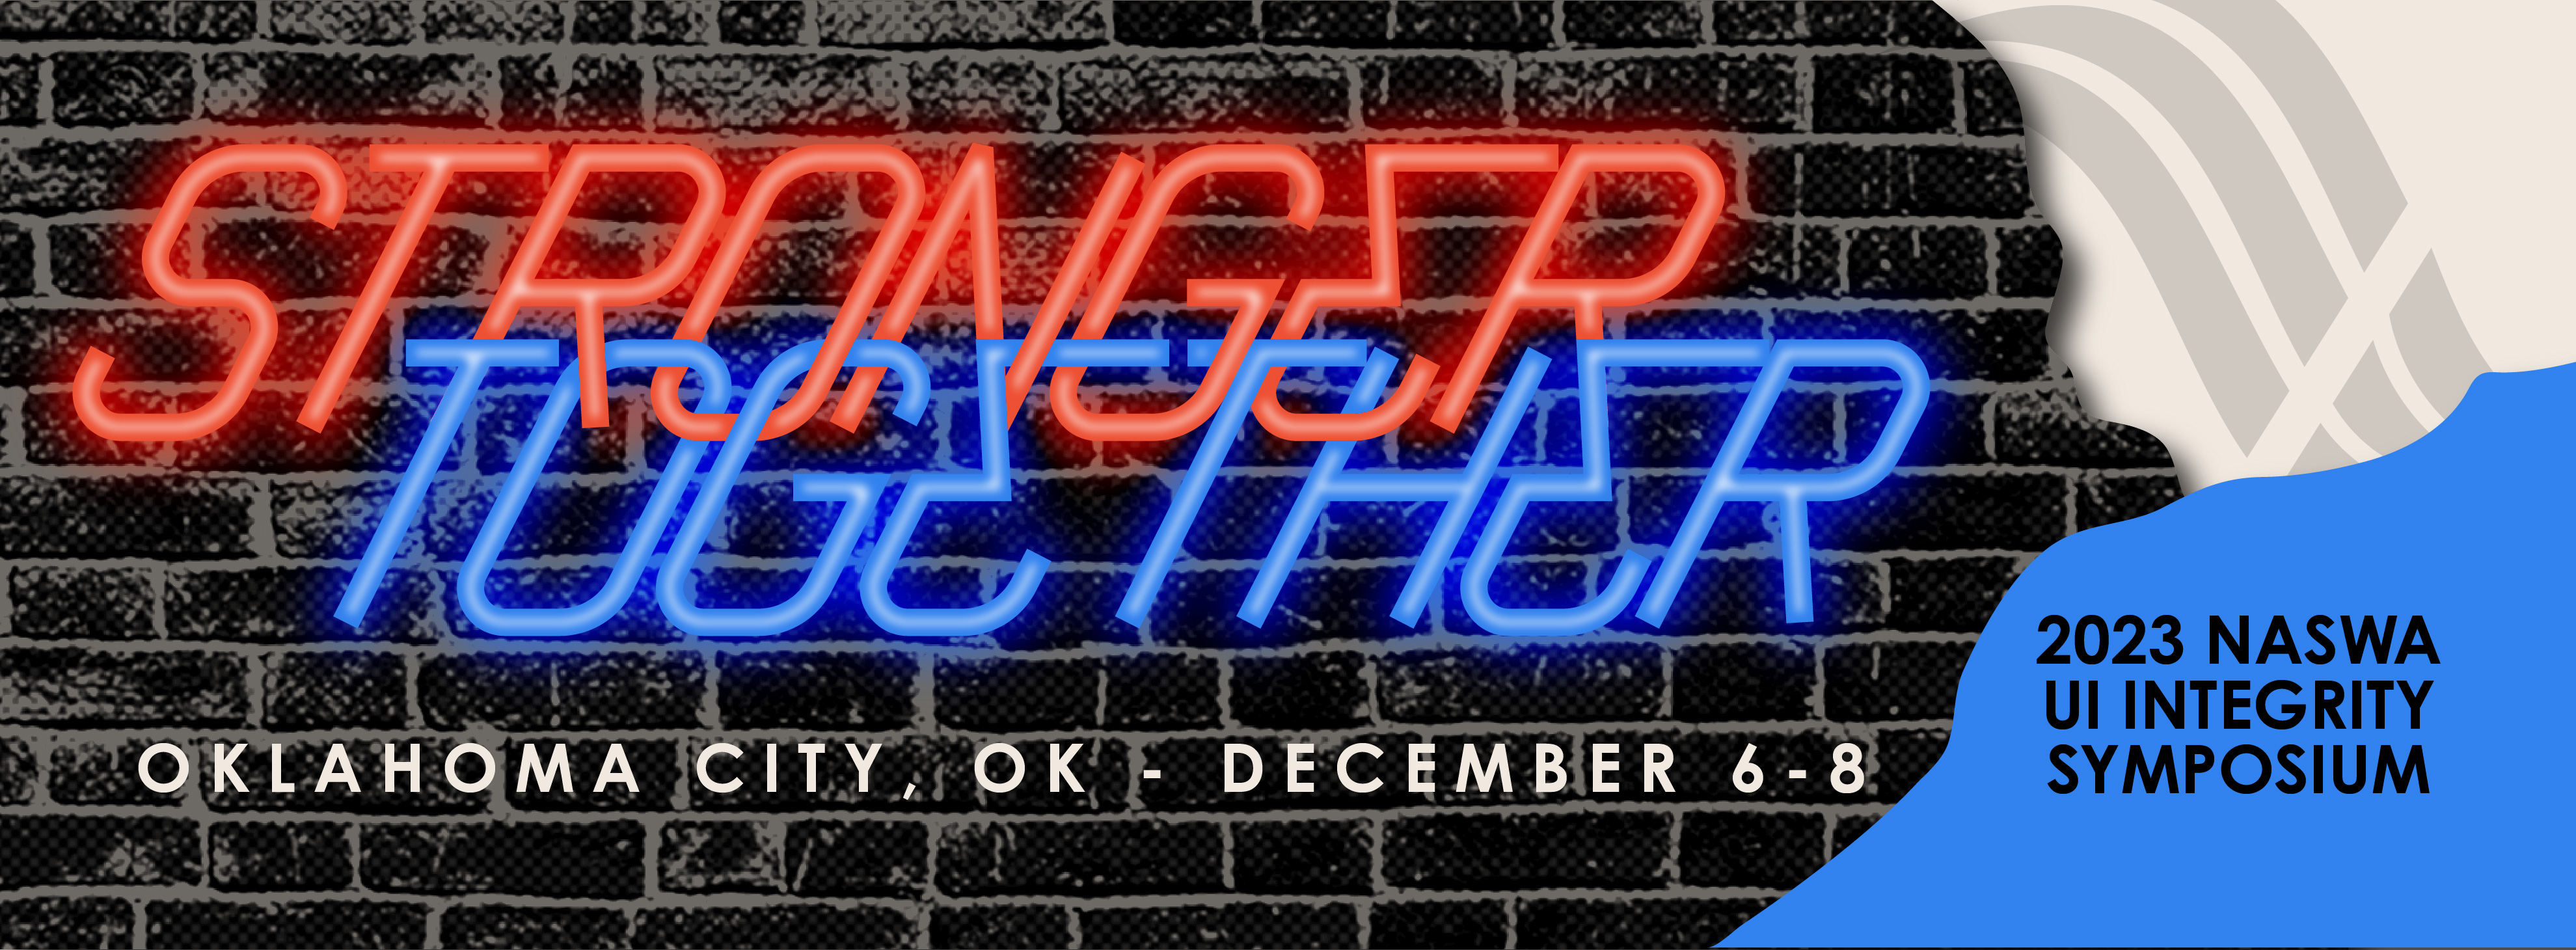 2023 UI Integrity Symposium | December 6 - 8 | Oklahoma City, OK